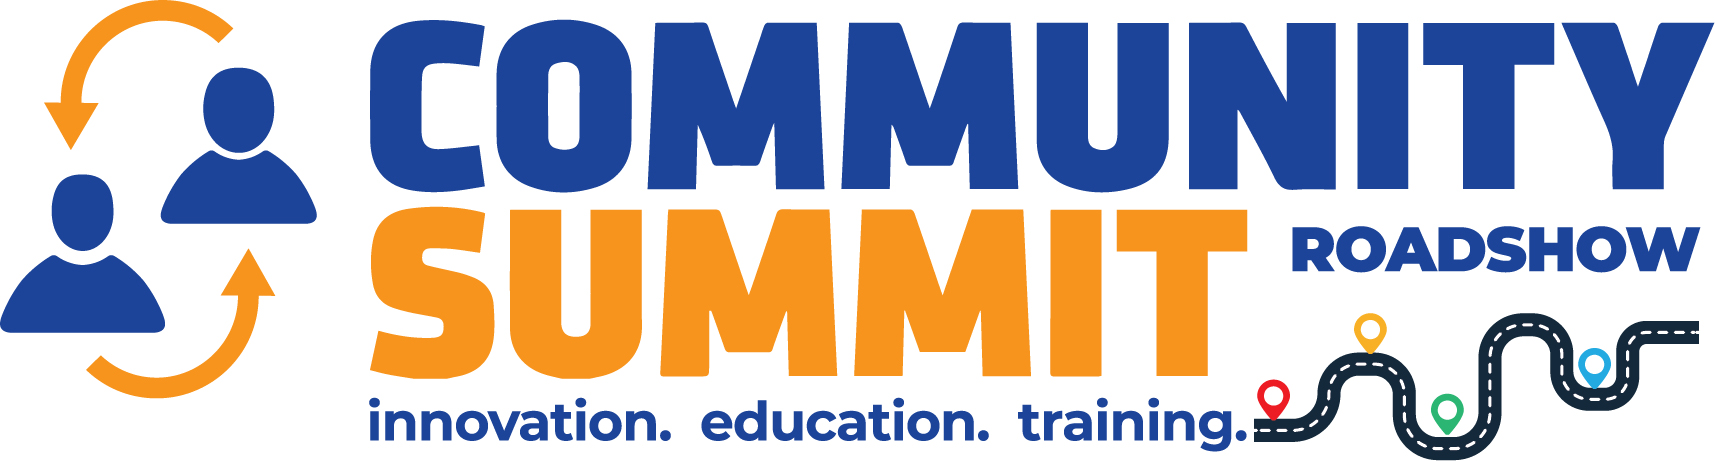 Community summit roadshow logo (1)